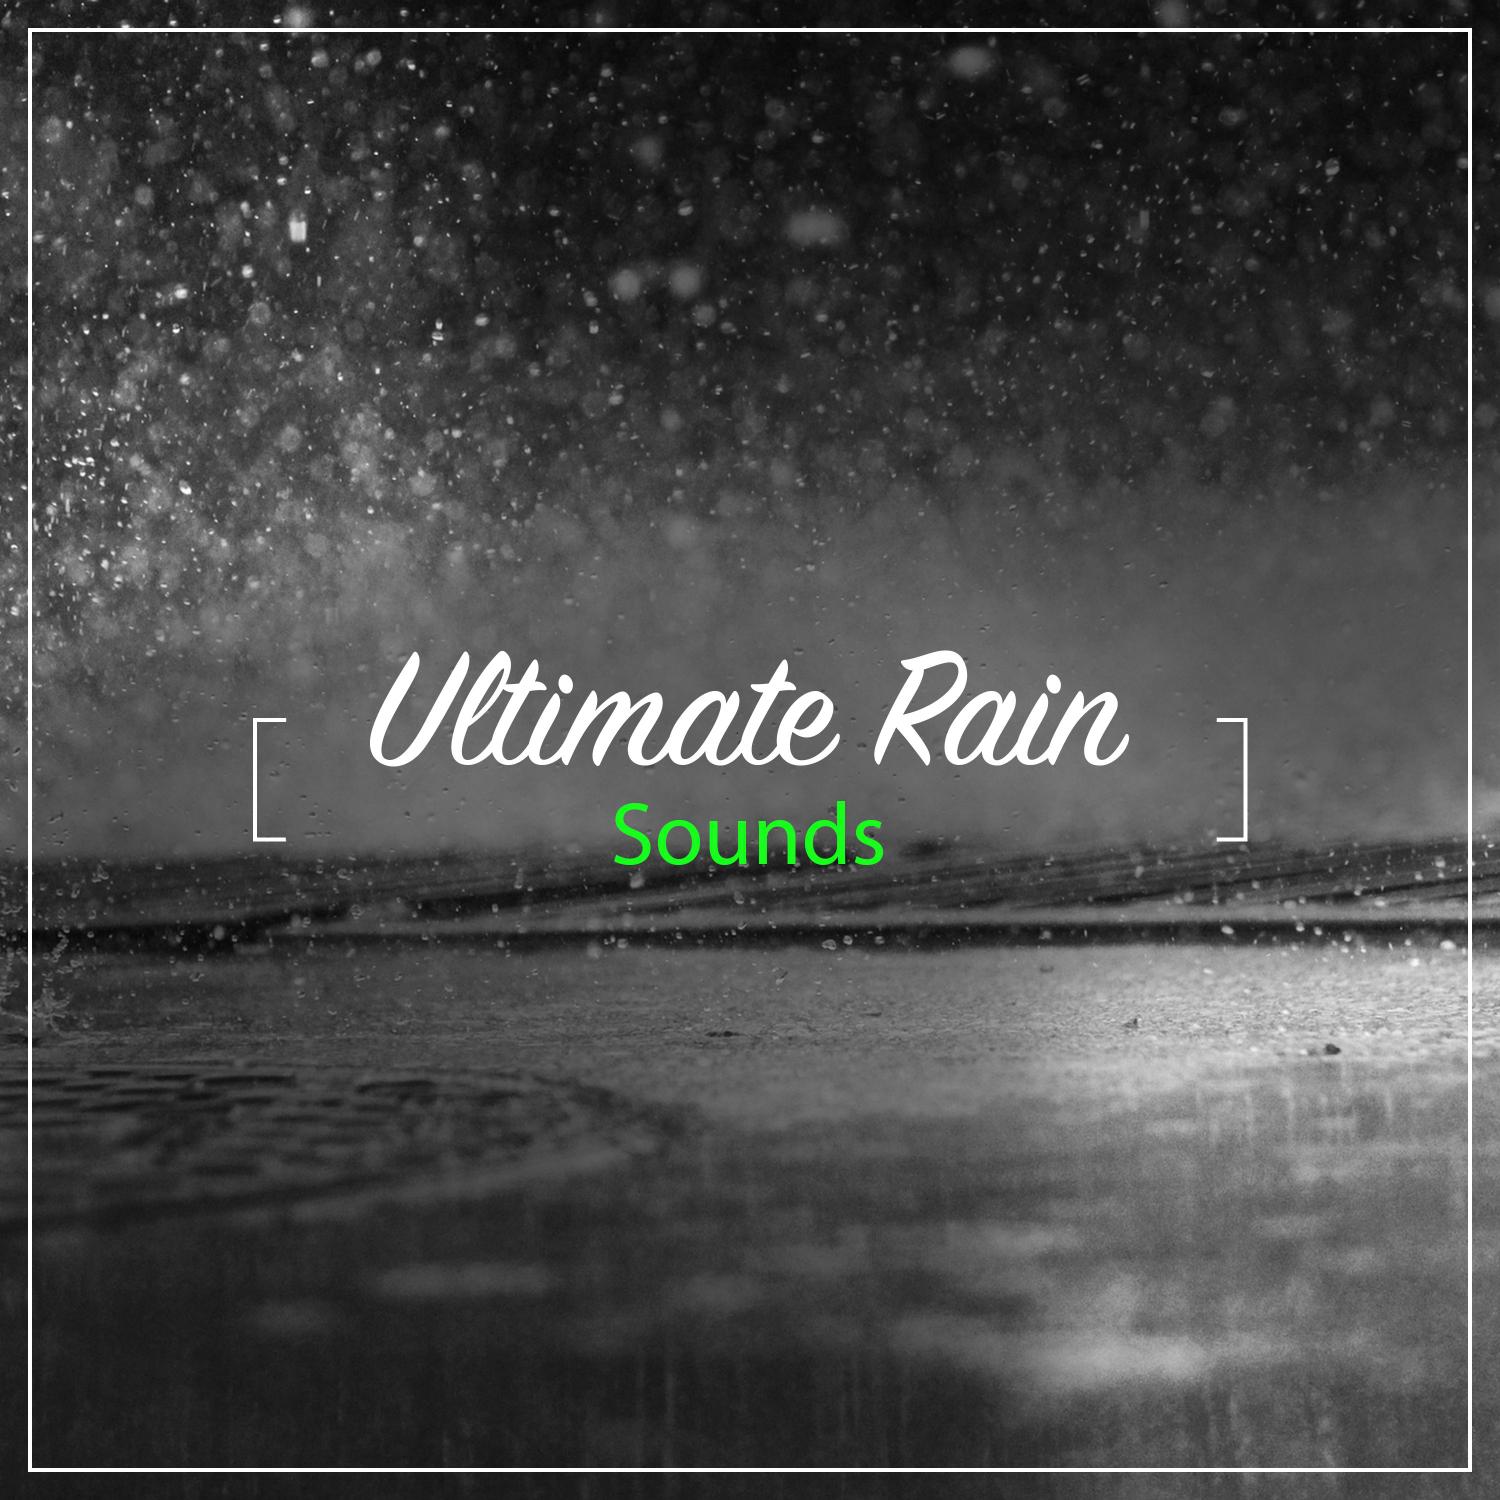 Ultimate Rain Sleep Collection